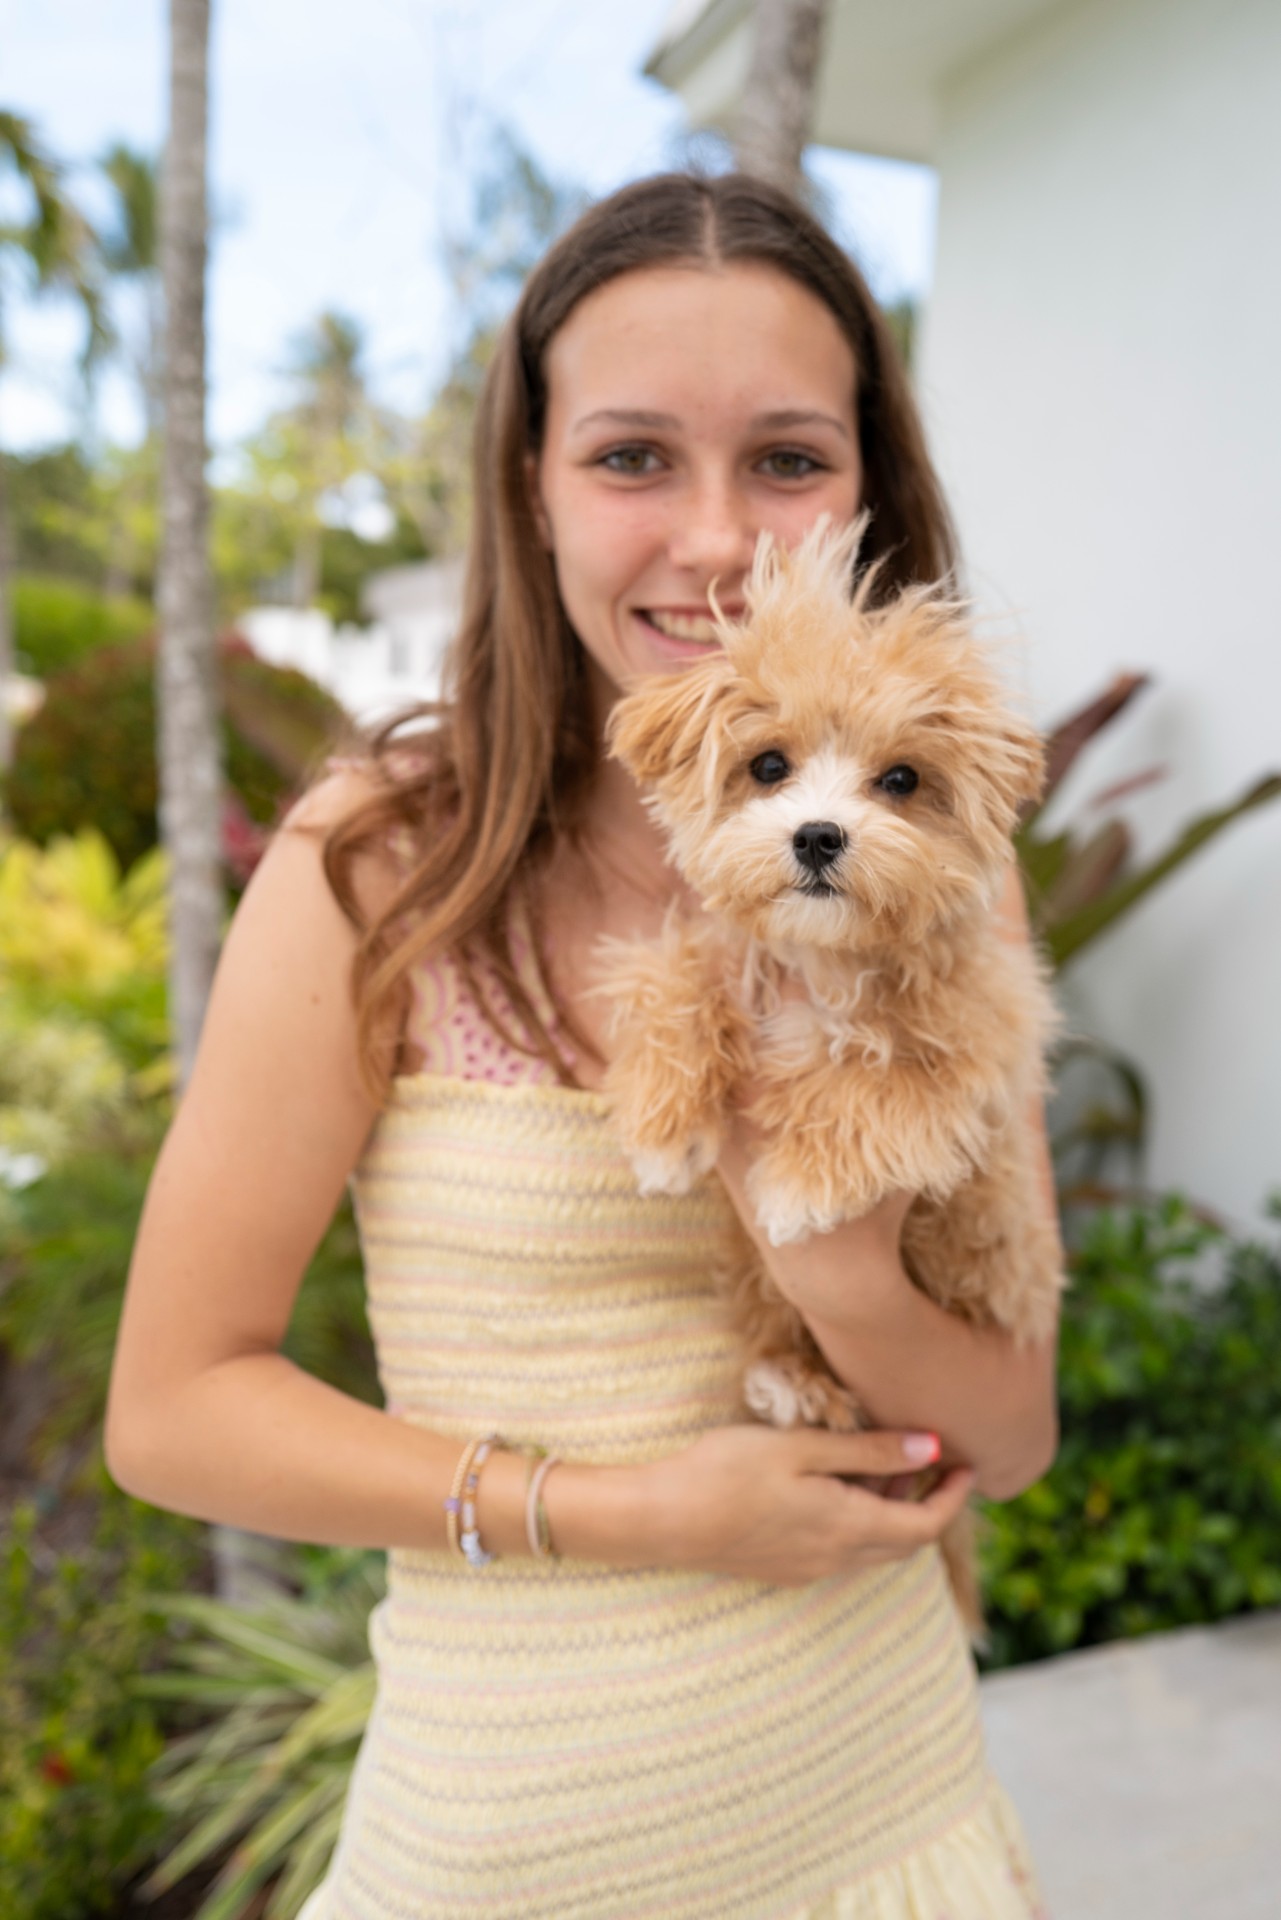 Charlotte Baeumler smiling with small dog